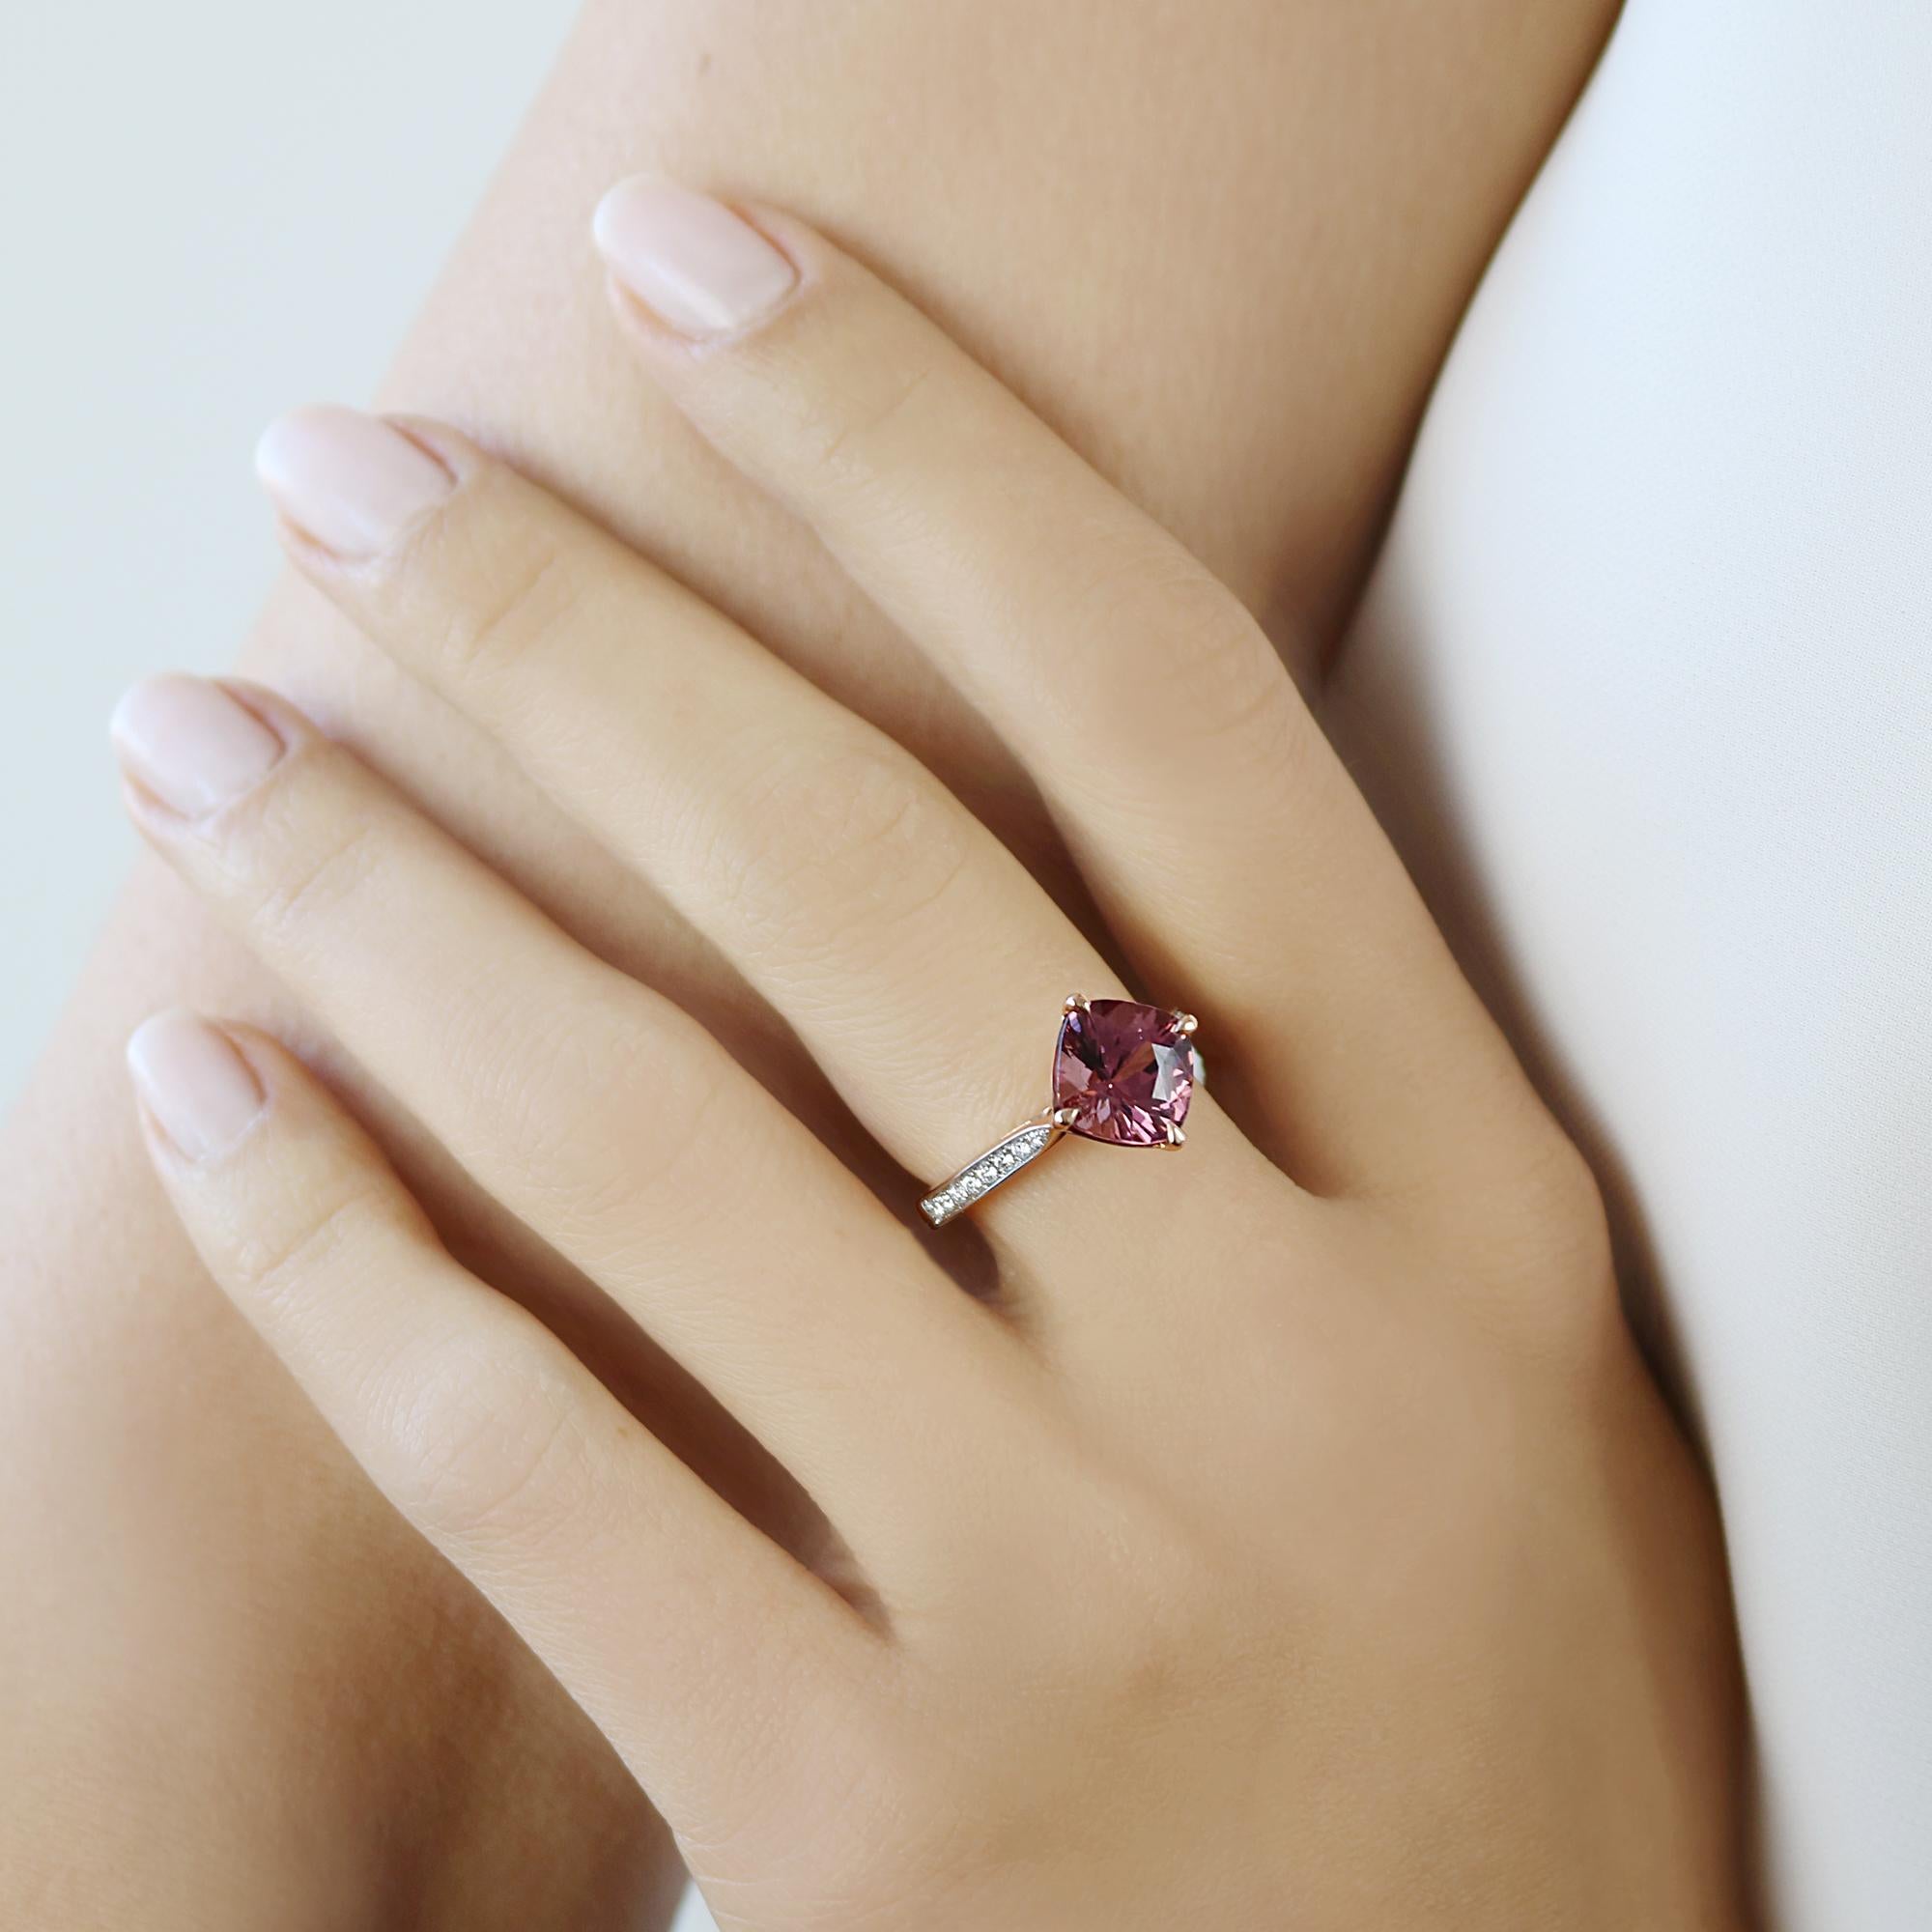 Cushion Cut Paolo Costagli 18 Karat Rose Gold Rhodolite Pink Garnet Ring with Diamonds